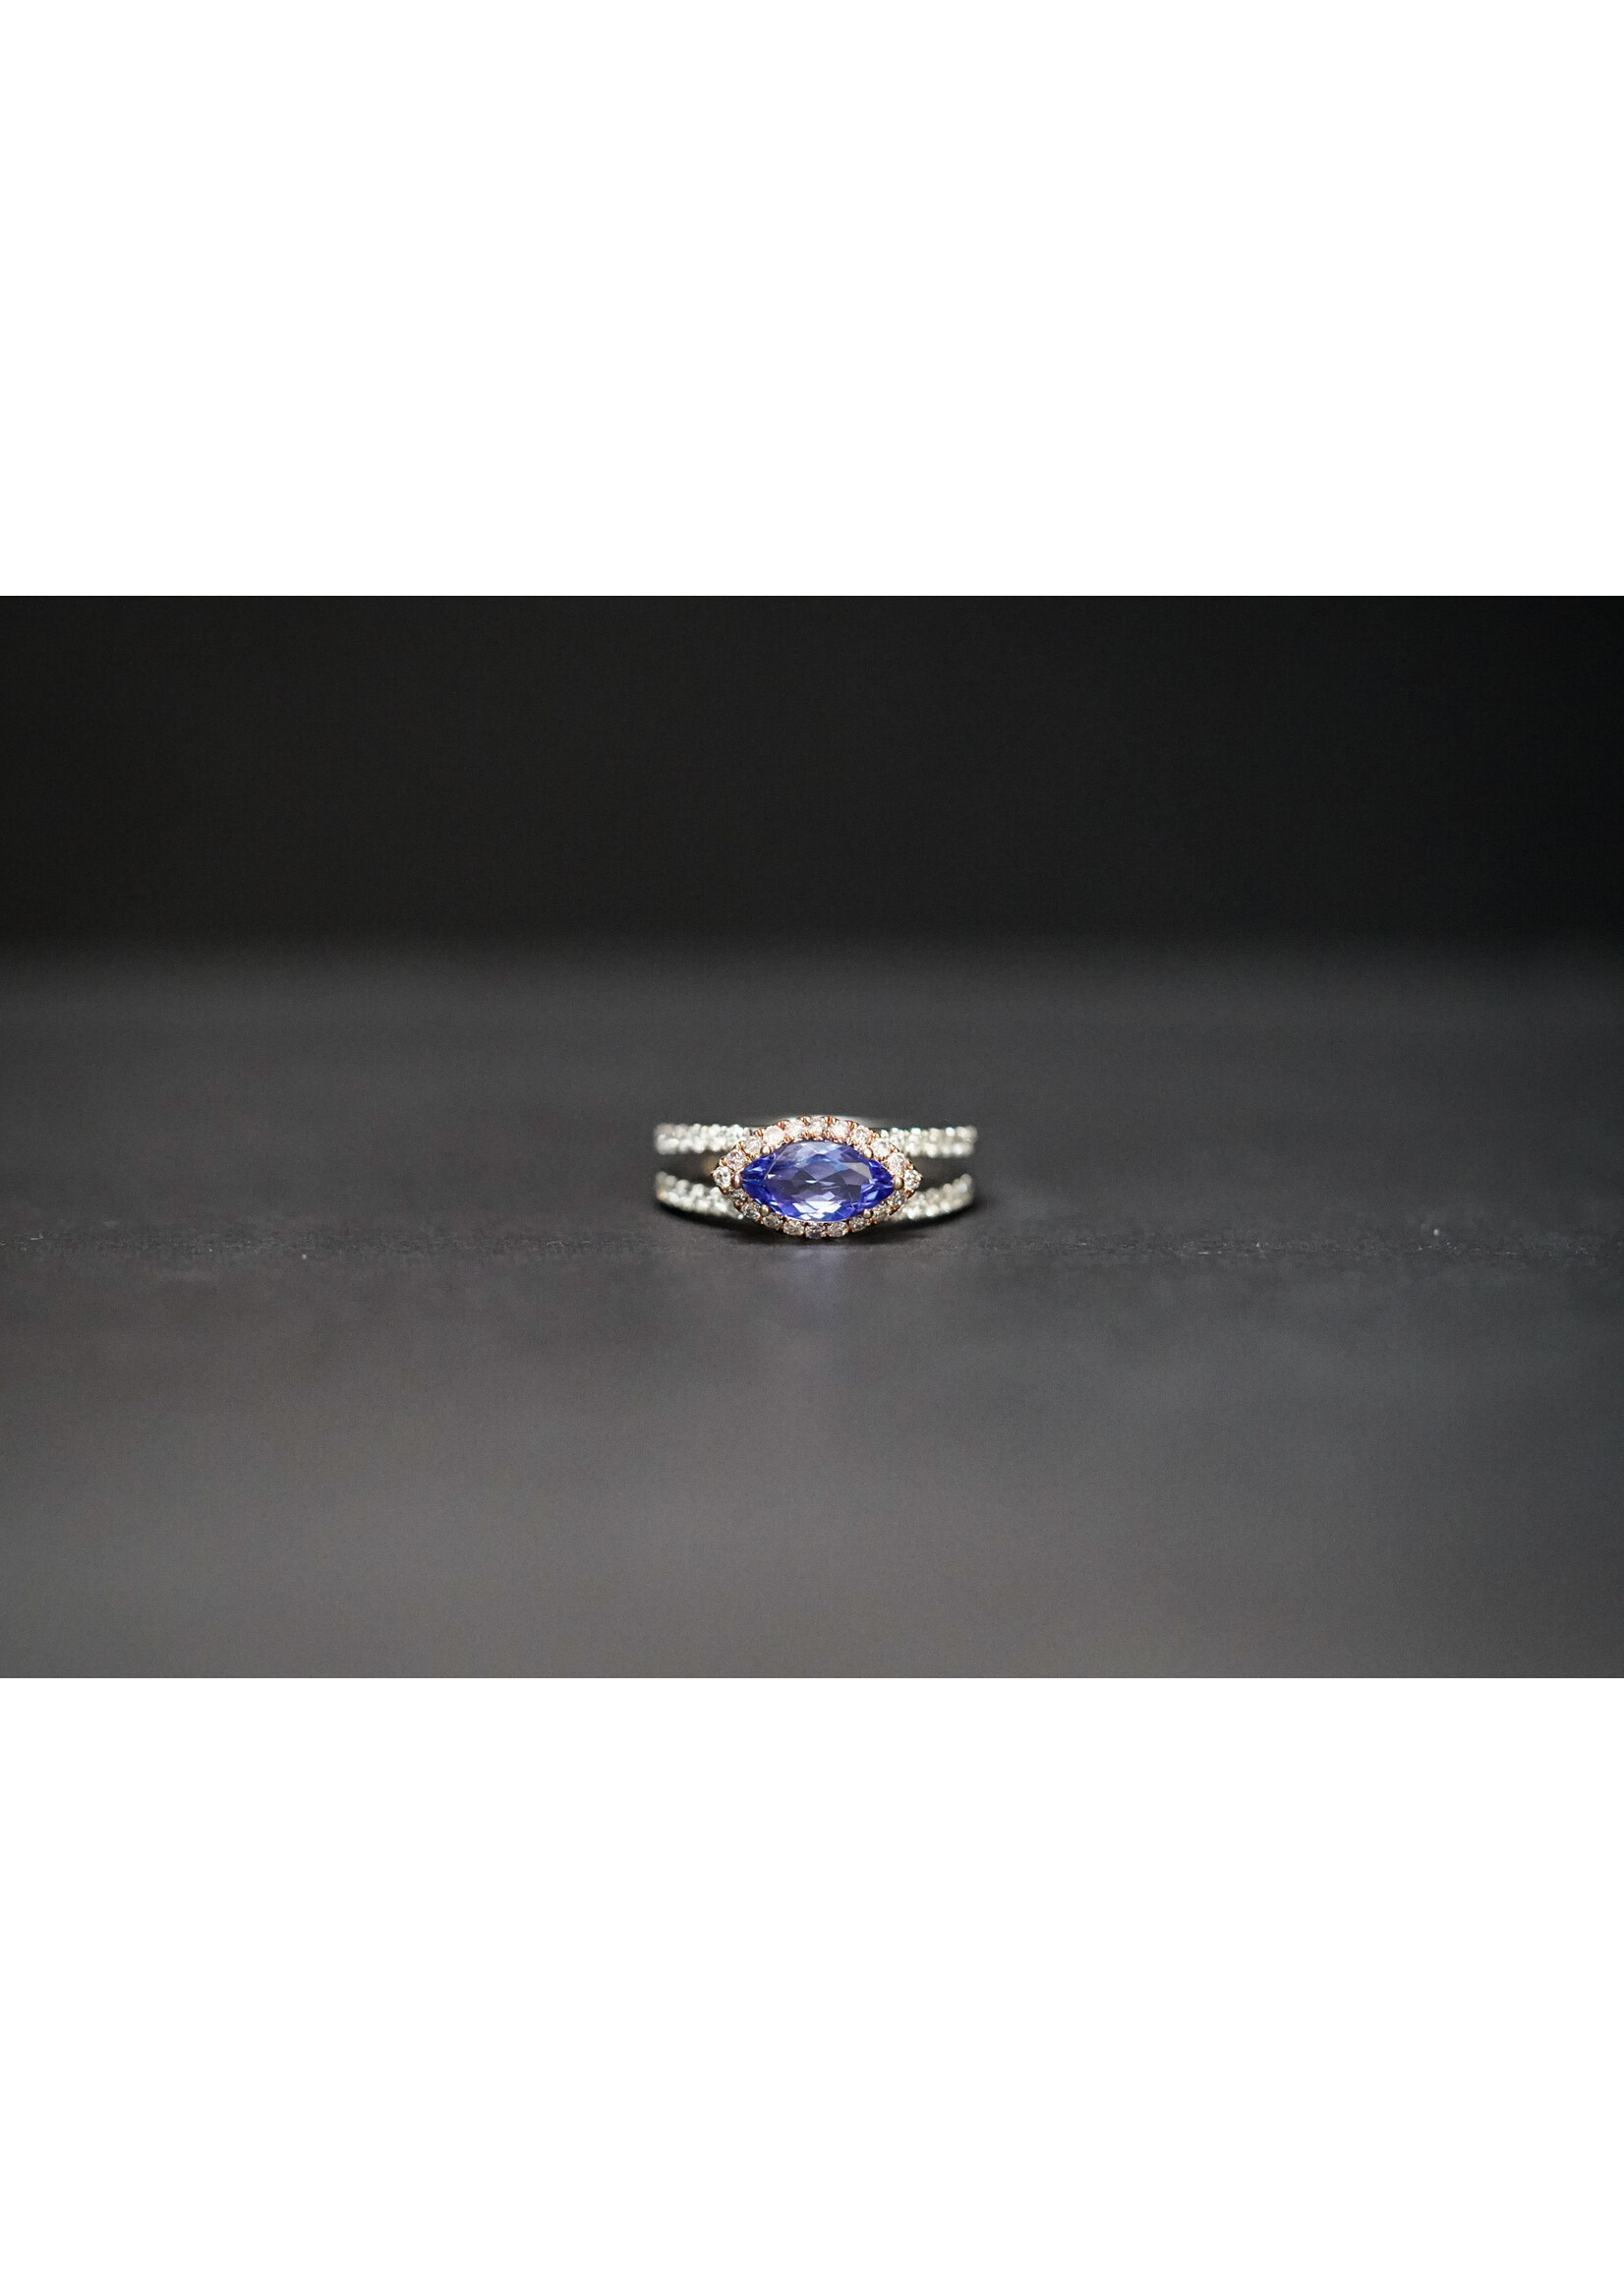 18KWR 4.61g 1.59ctw (1.10ctr) Tanzanite & Diamond Halo Fashion Ring (size 6.5)